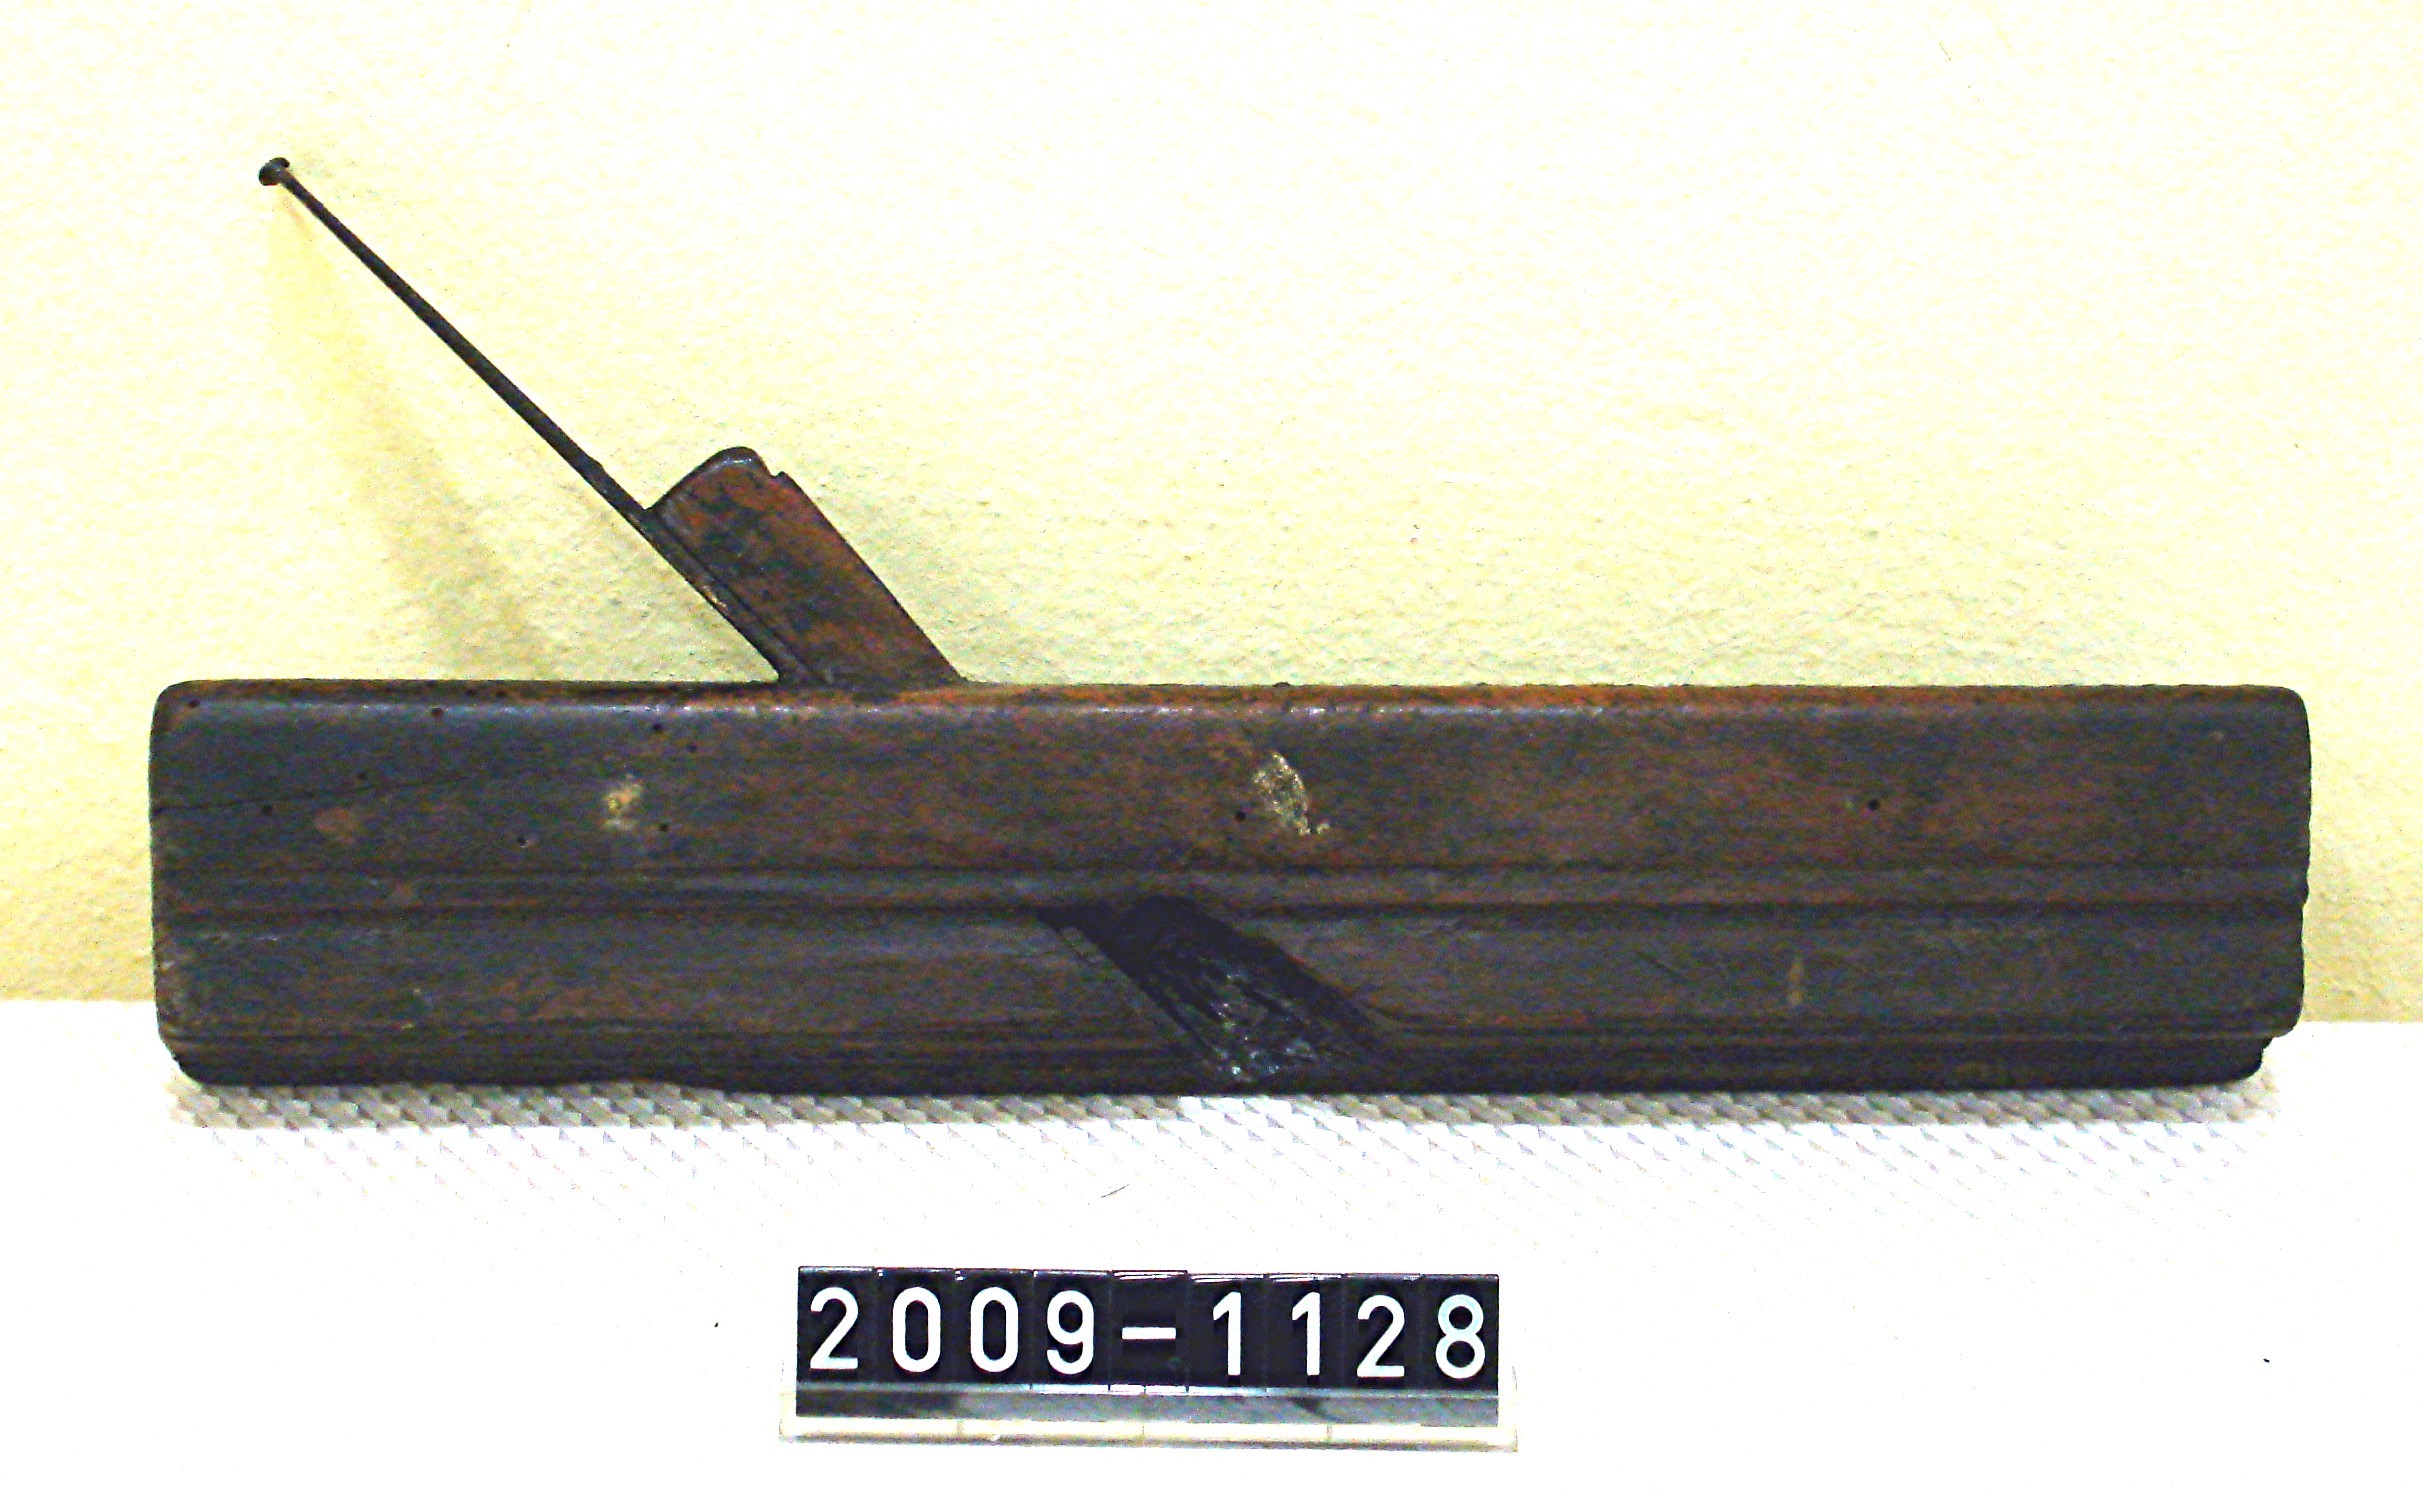 Küferhandwerkszeug aus Eisen/Holz; Handhobel; Küferhobel; 19. Jh. (Stadtmuseum Bad Dürkheim, Museumsgesellschaft Bad Dürkheim e.V. CC BY-NC-SA)